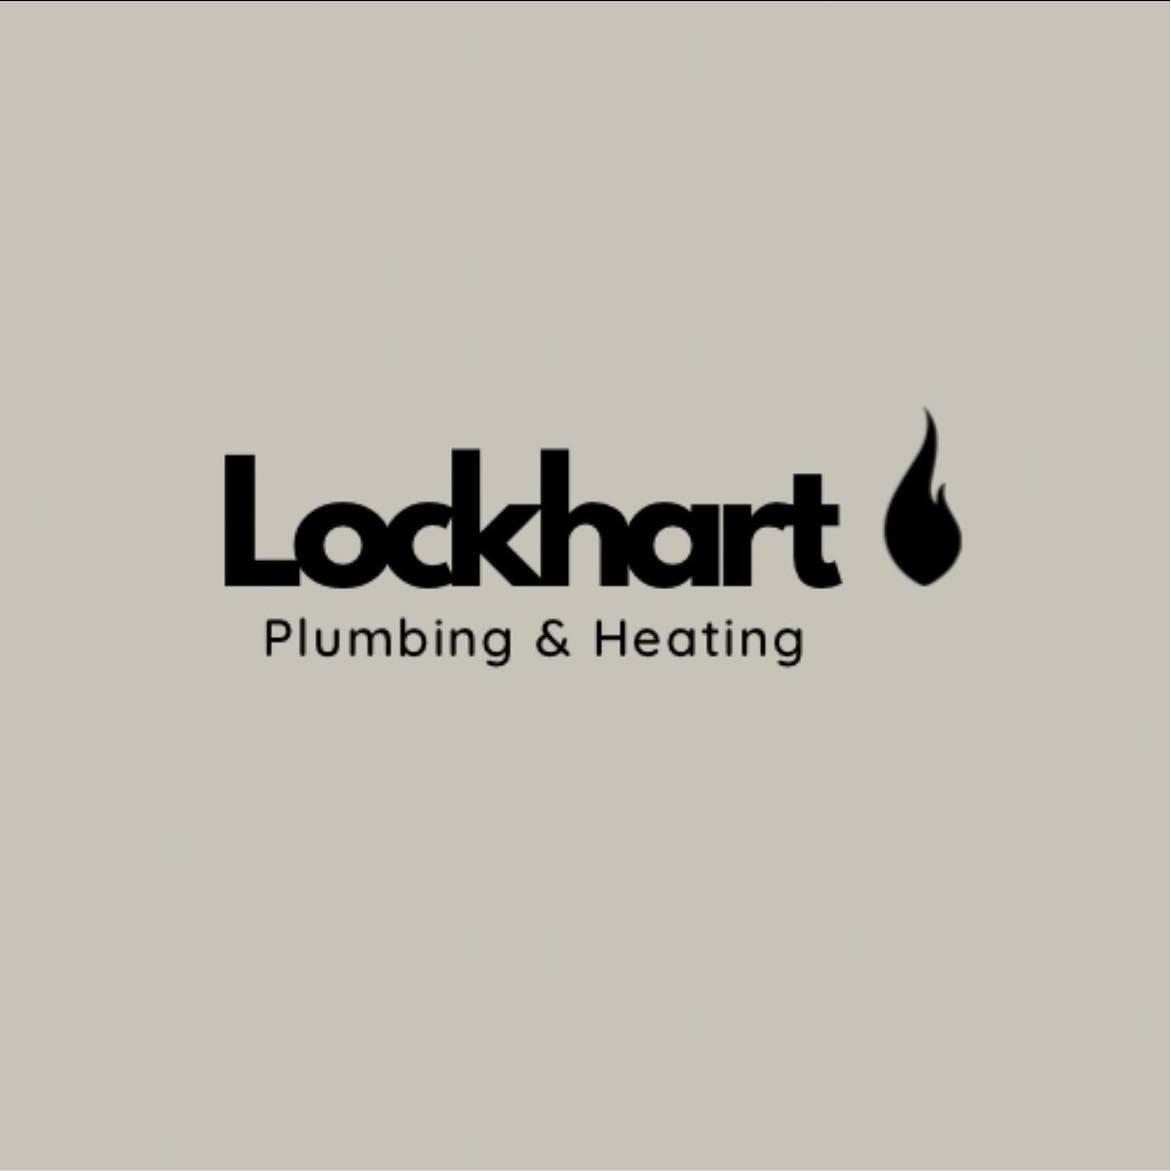 LOGO Lockhart Plumbing & Heating Glasgow 07867 882823